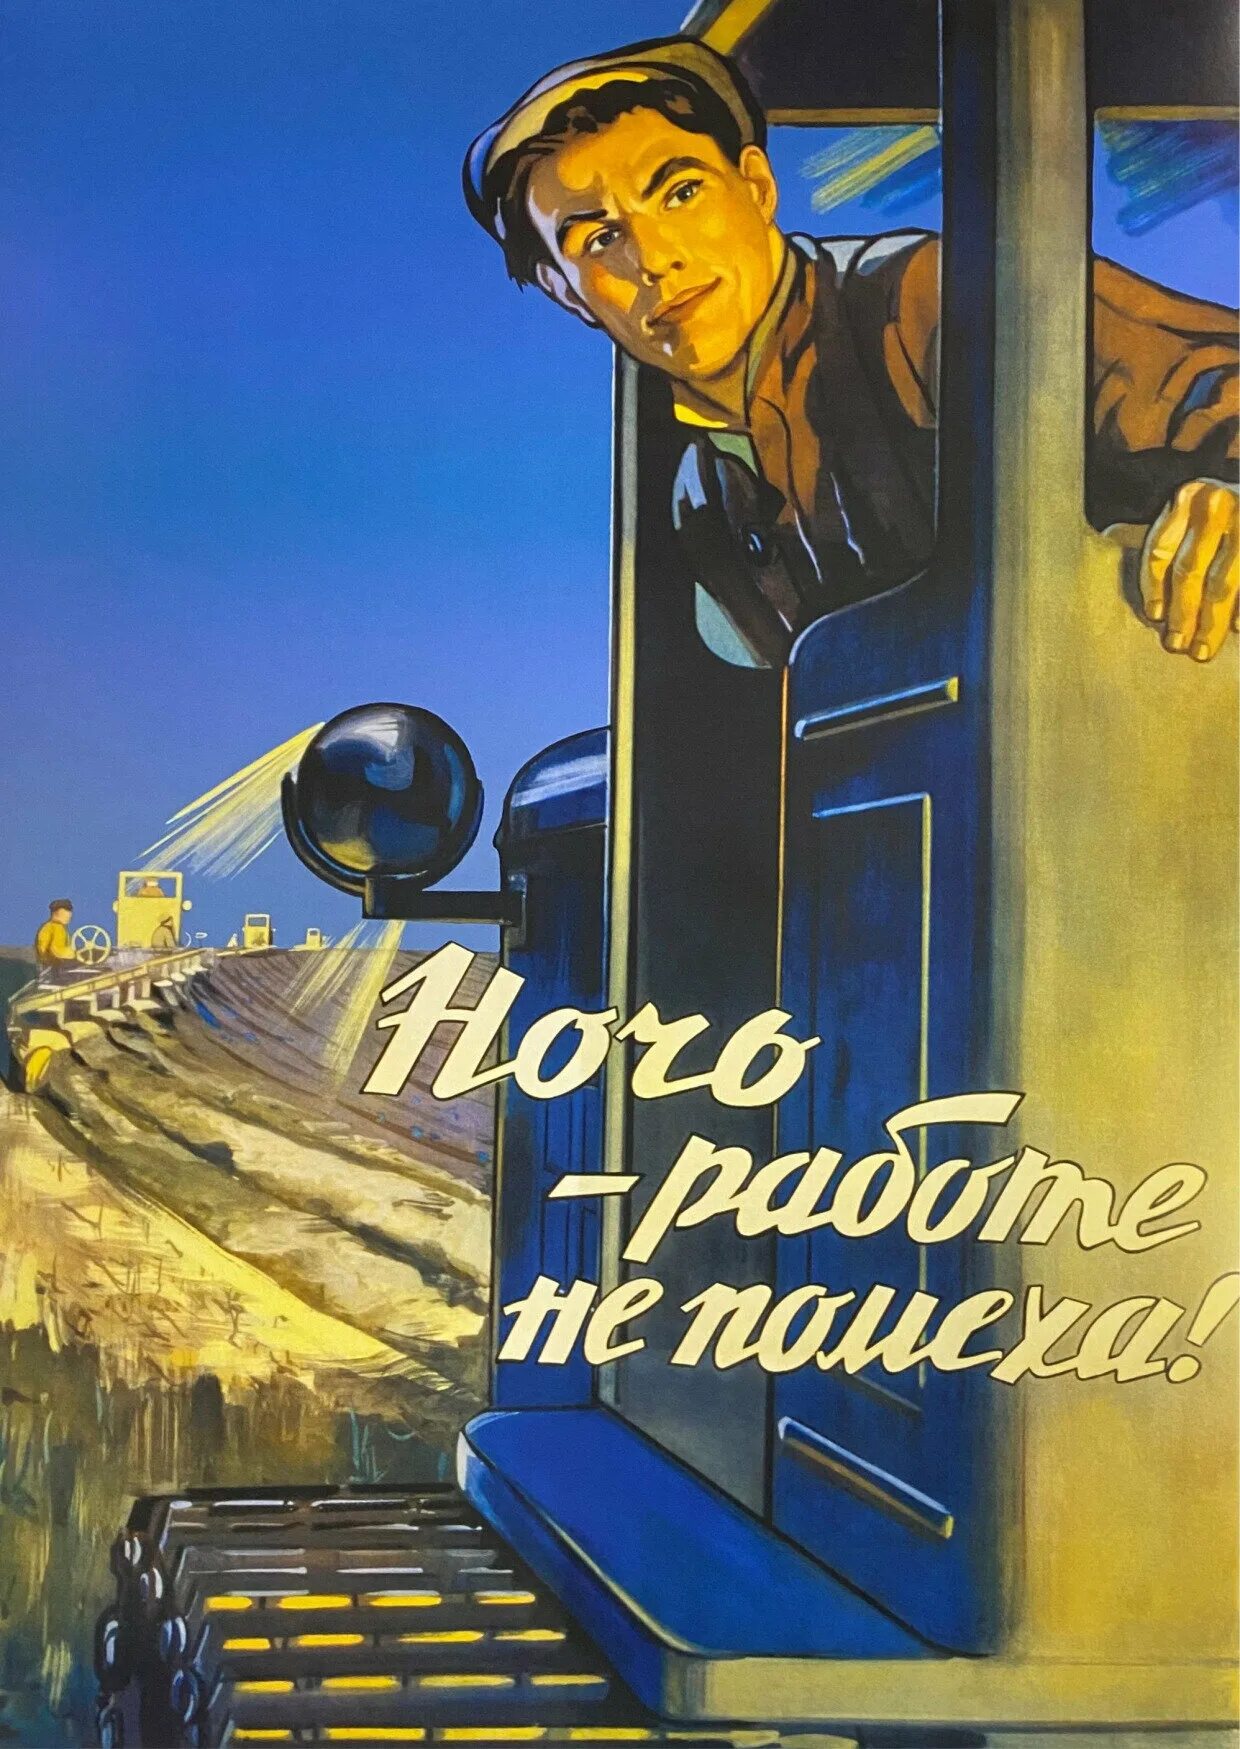 Плакат скорее бы на работу. Советские плакаты. Ночь работе не помеха. Плакат ночь работе не помеха. Советские плакаты про работу и труд.